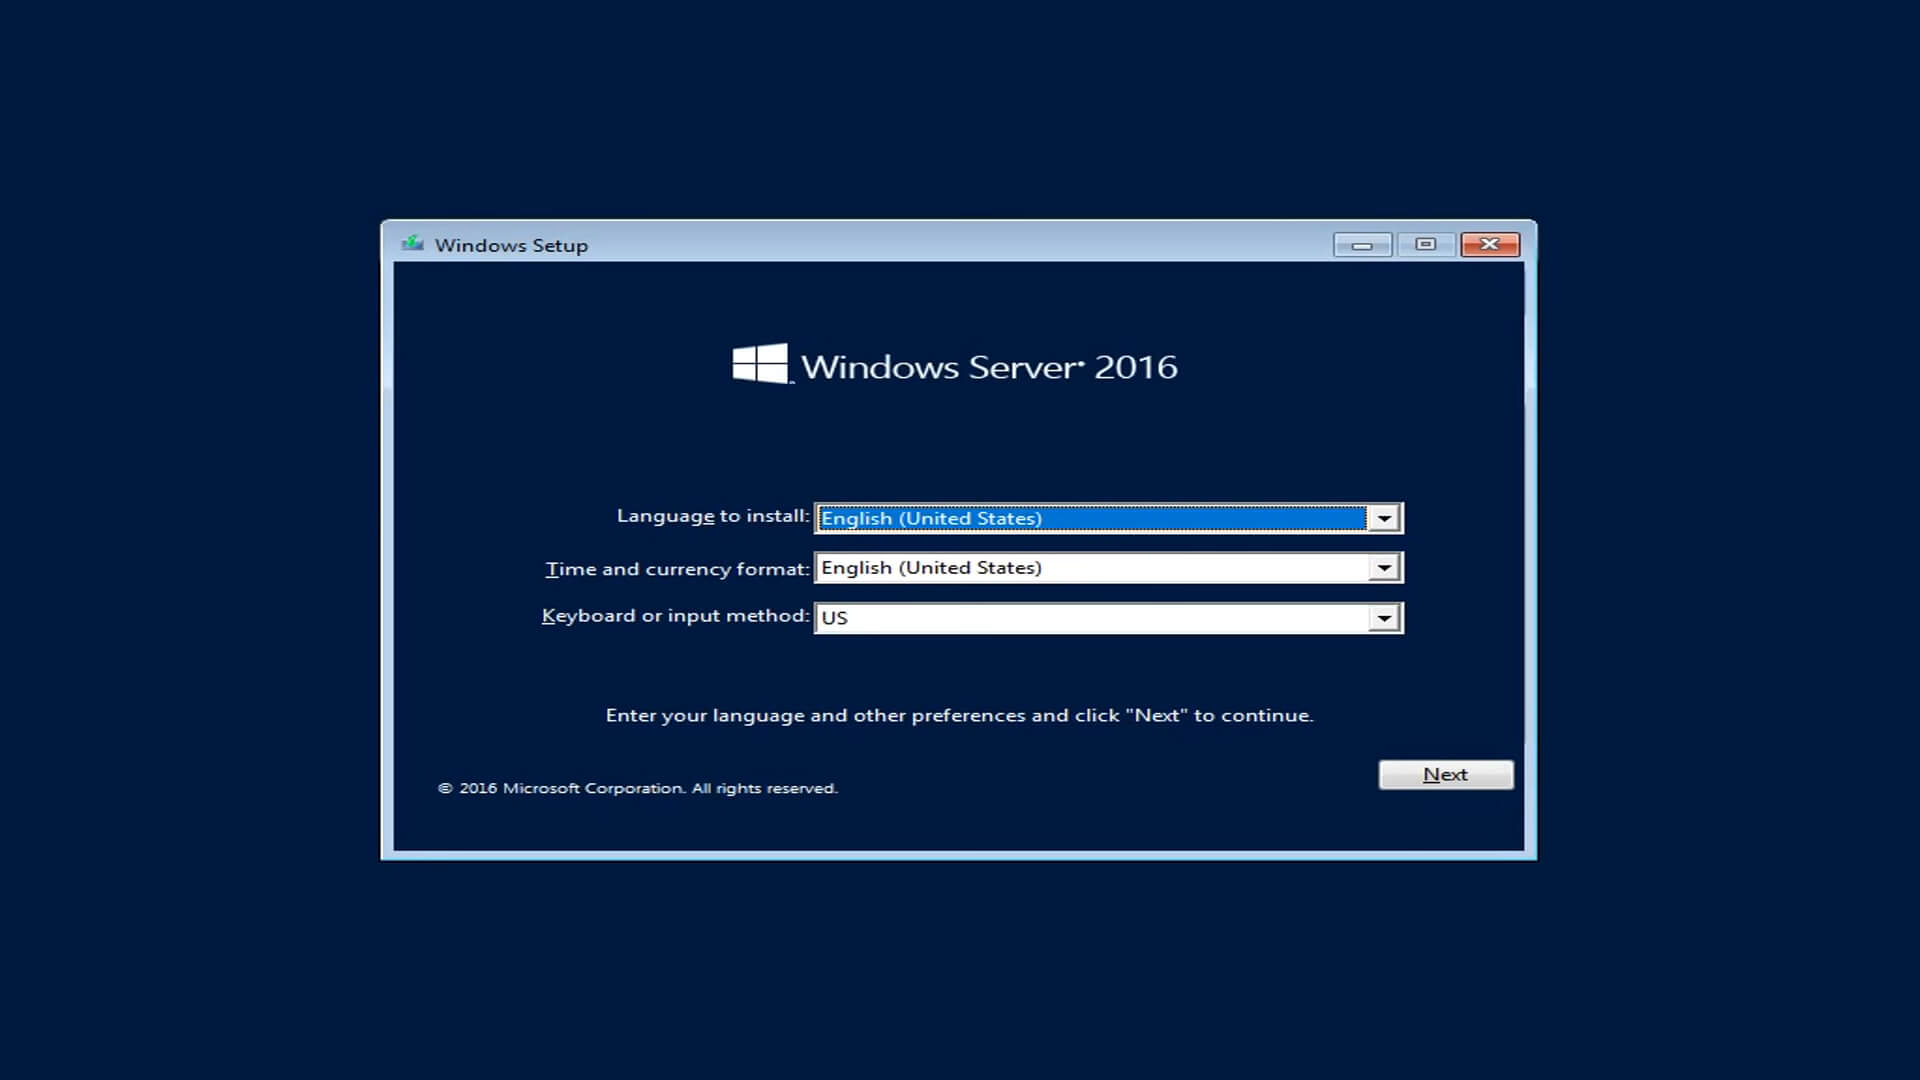 Windows Server 2016 setup window how to repair windows server 